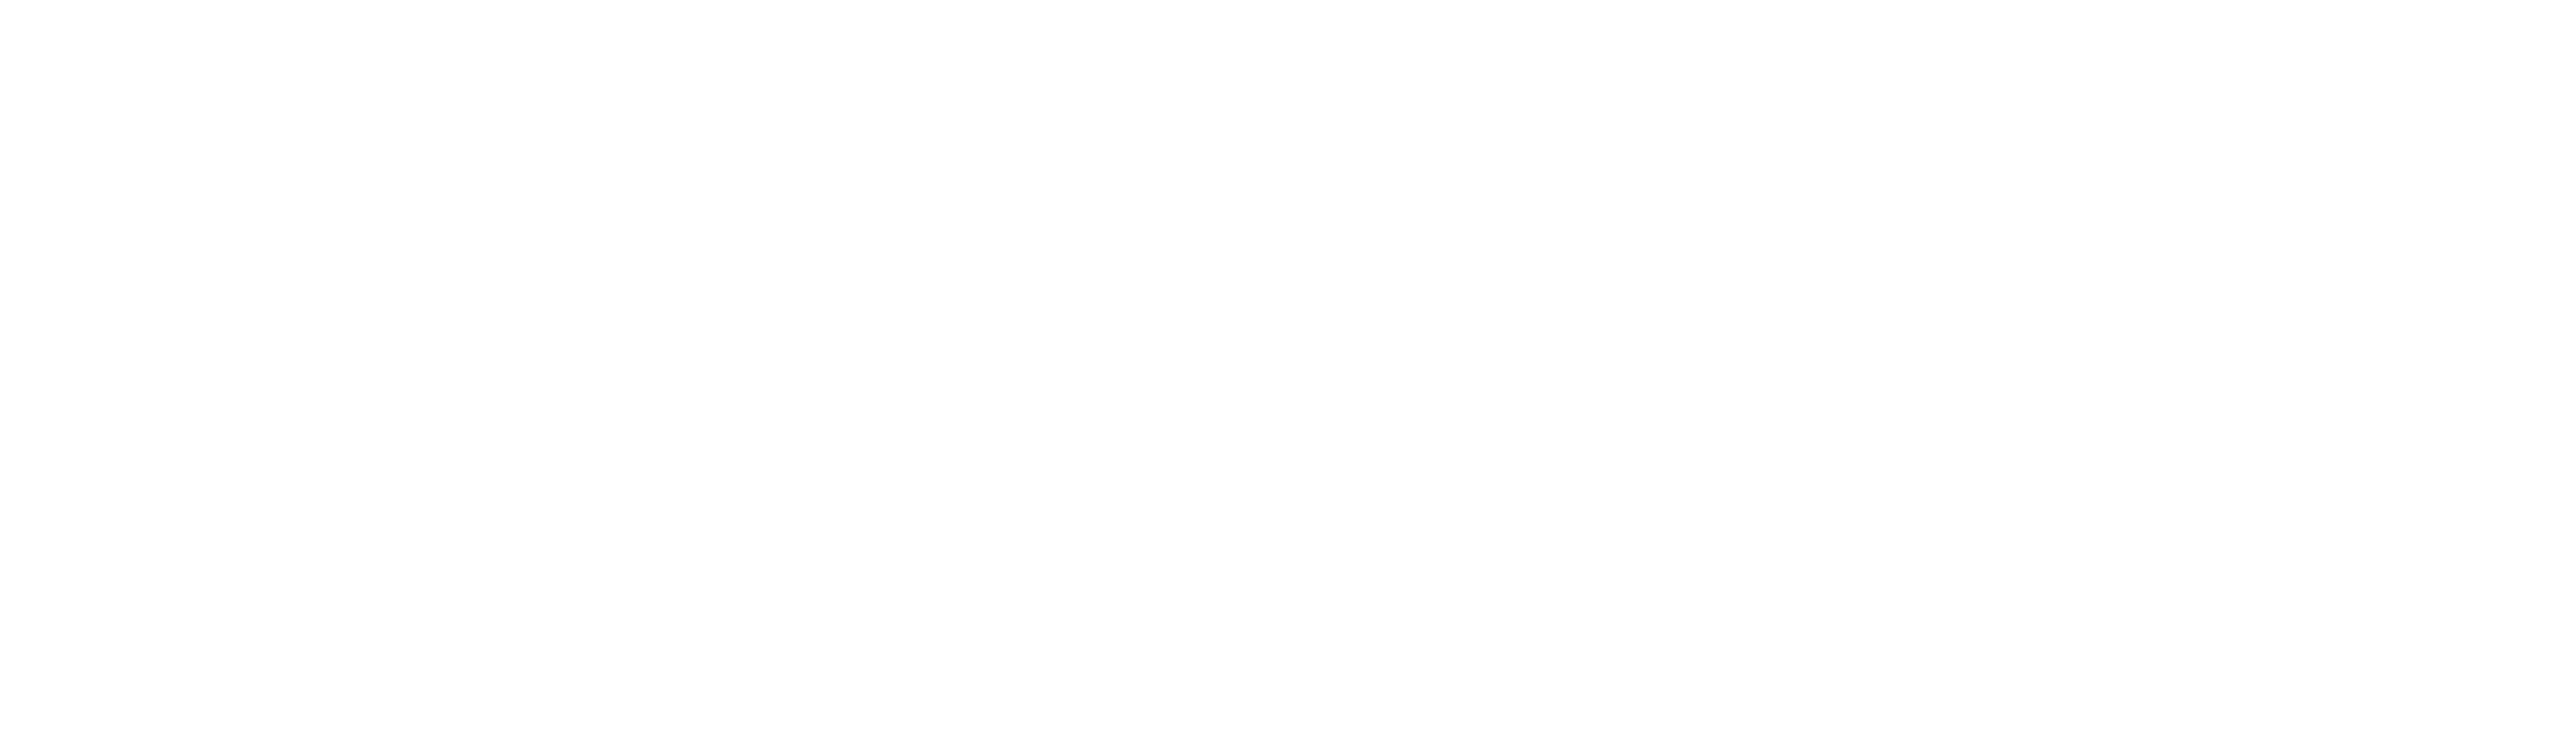 Cast & Crew Logo